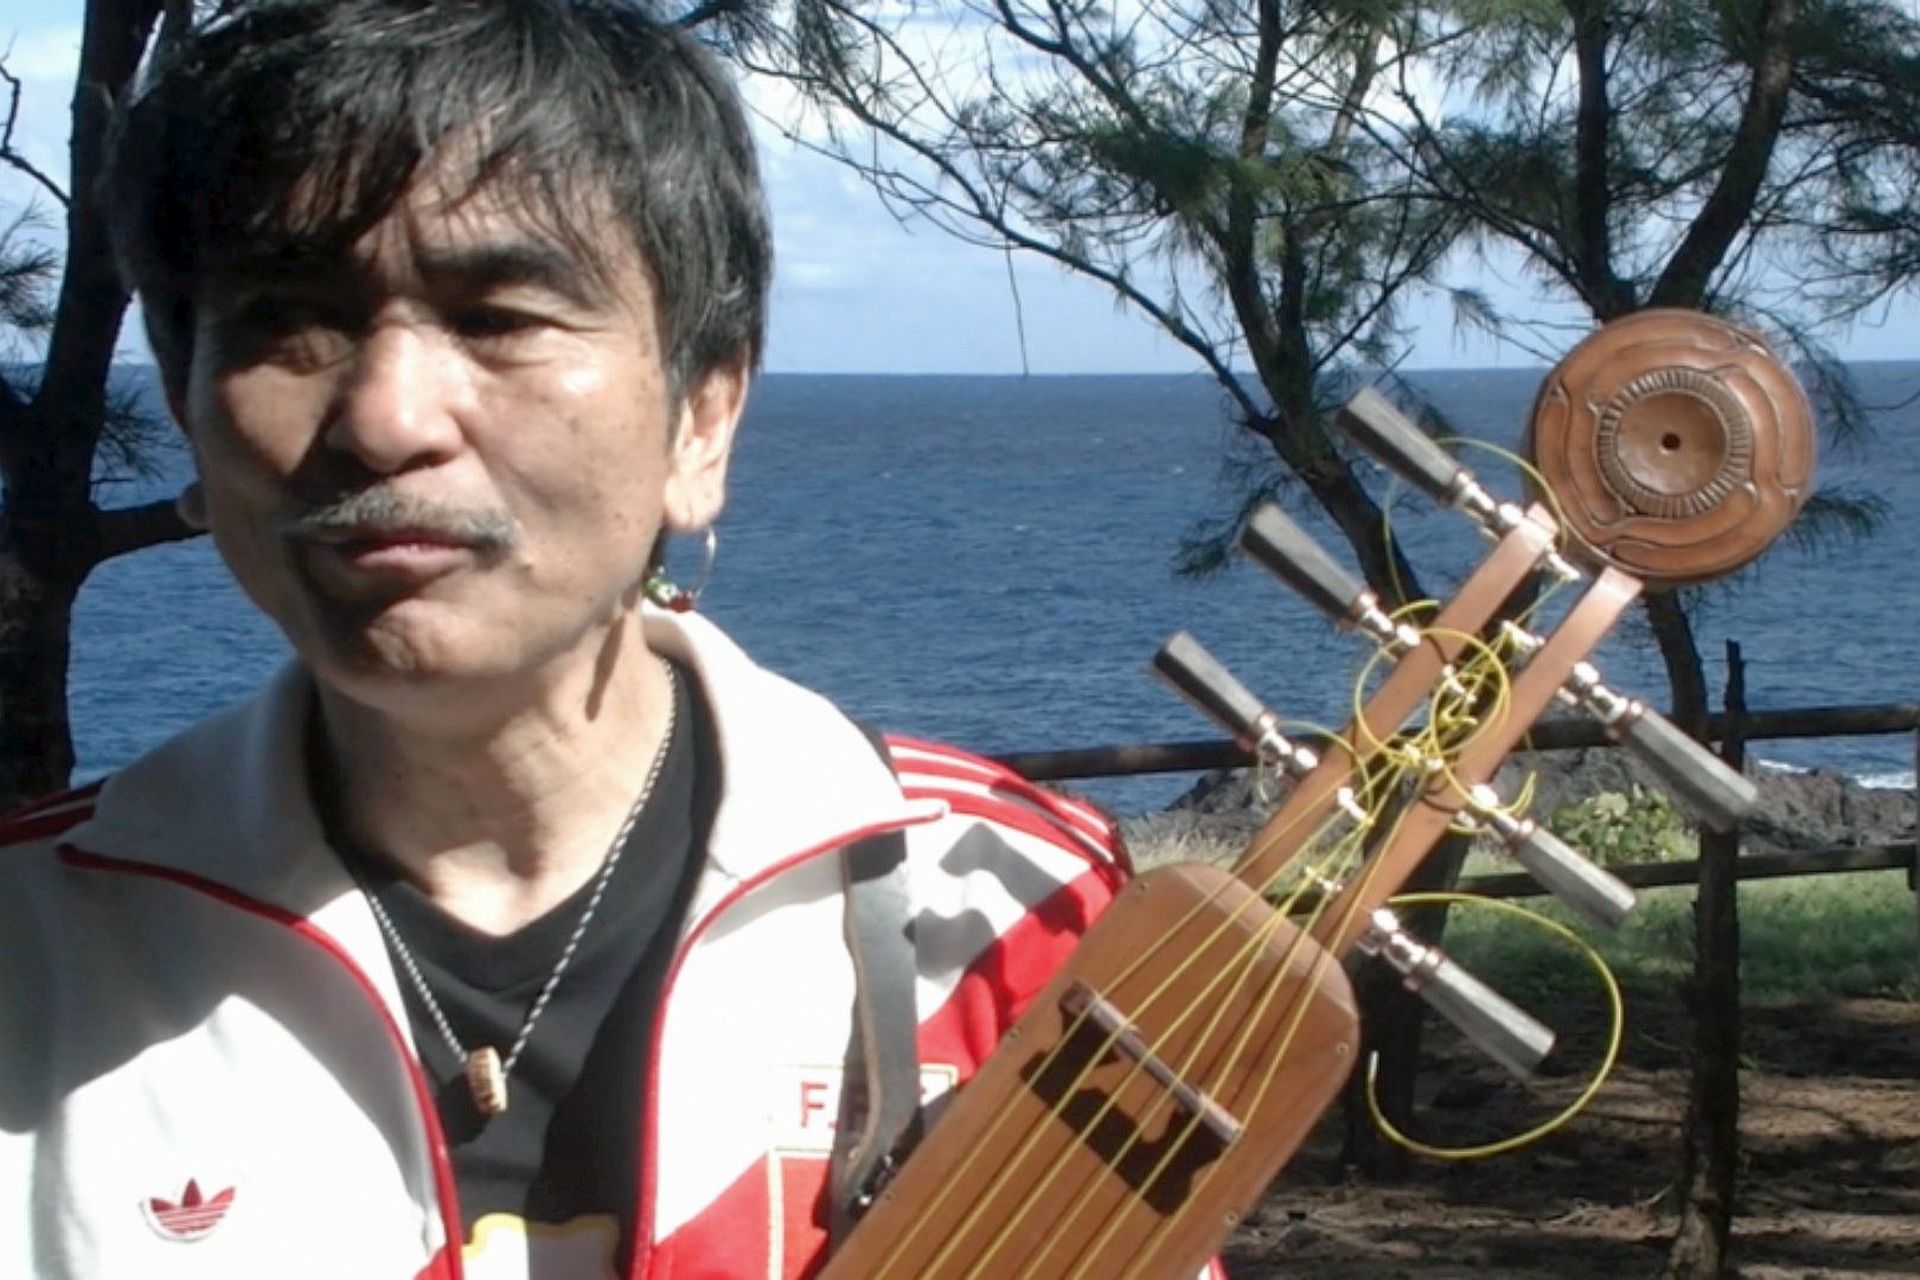 Oki Dub Ainu Band